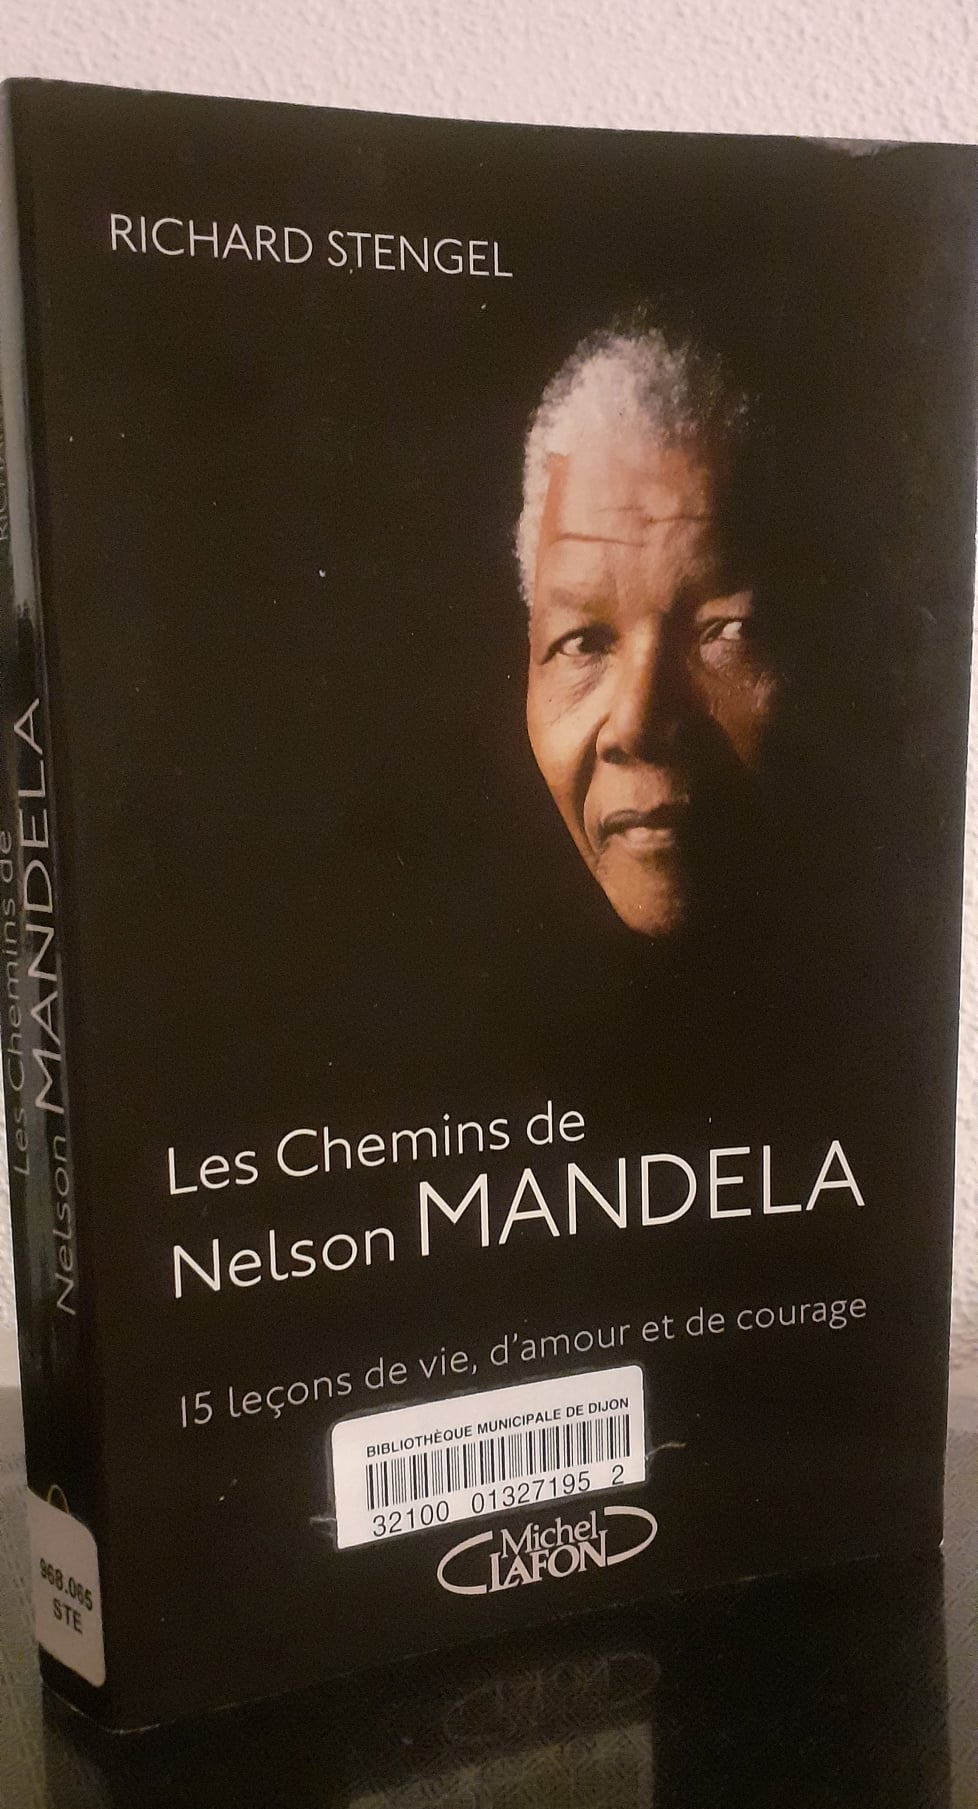 Les Chemins de Nelson Mandela